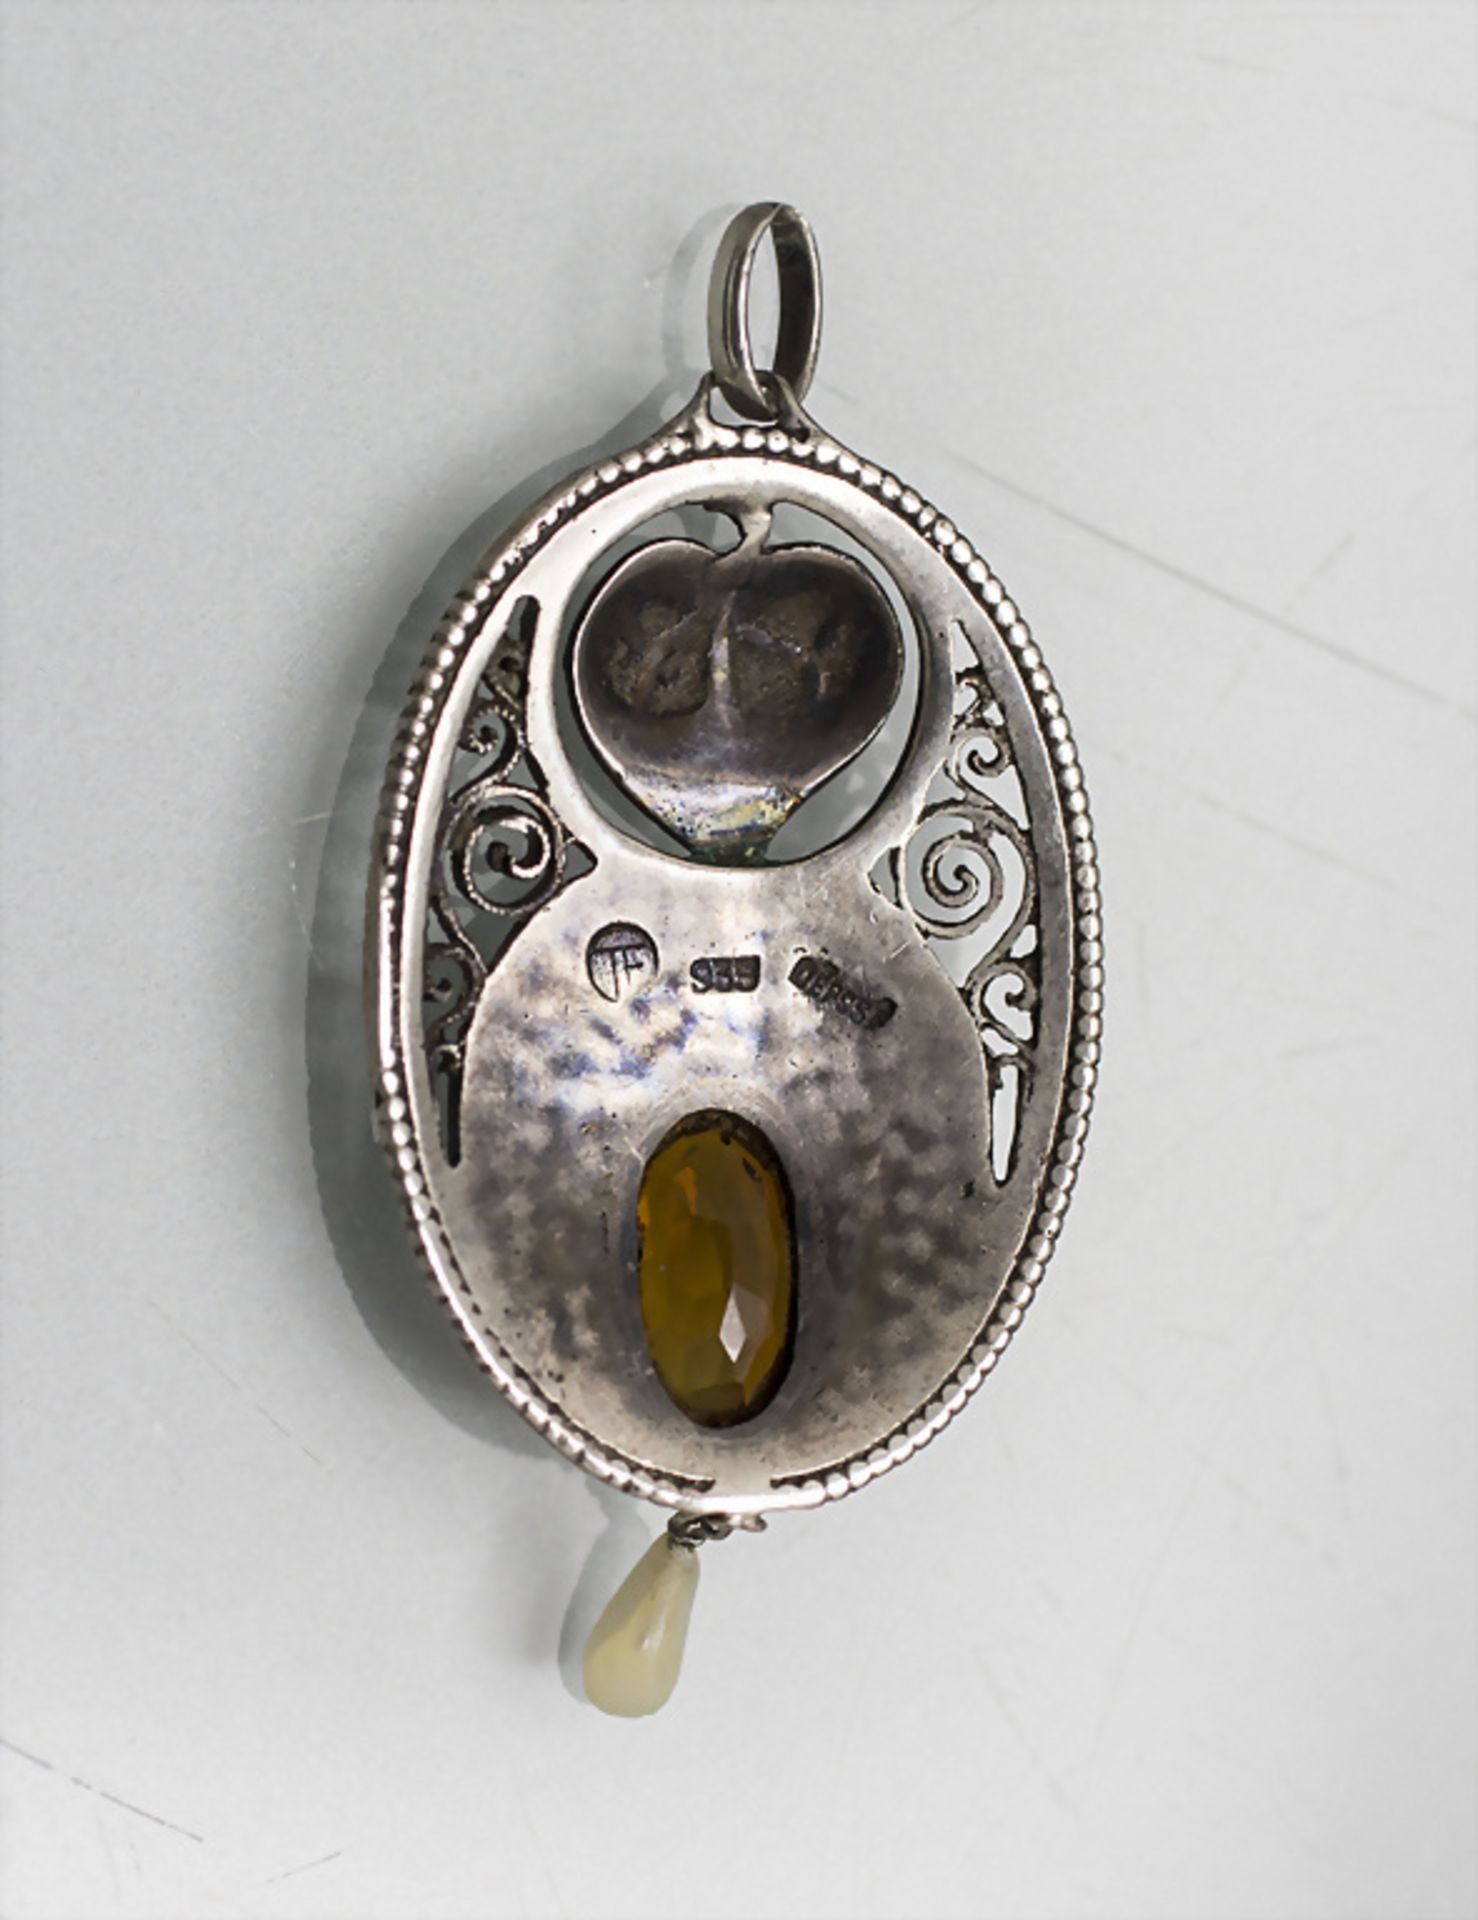 Jugendstil Anhänger / An Art Nouveau silver pendant, Theodor Fahrner, Pforzheim, um 1920 - Image 2 of 2